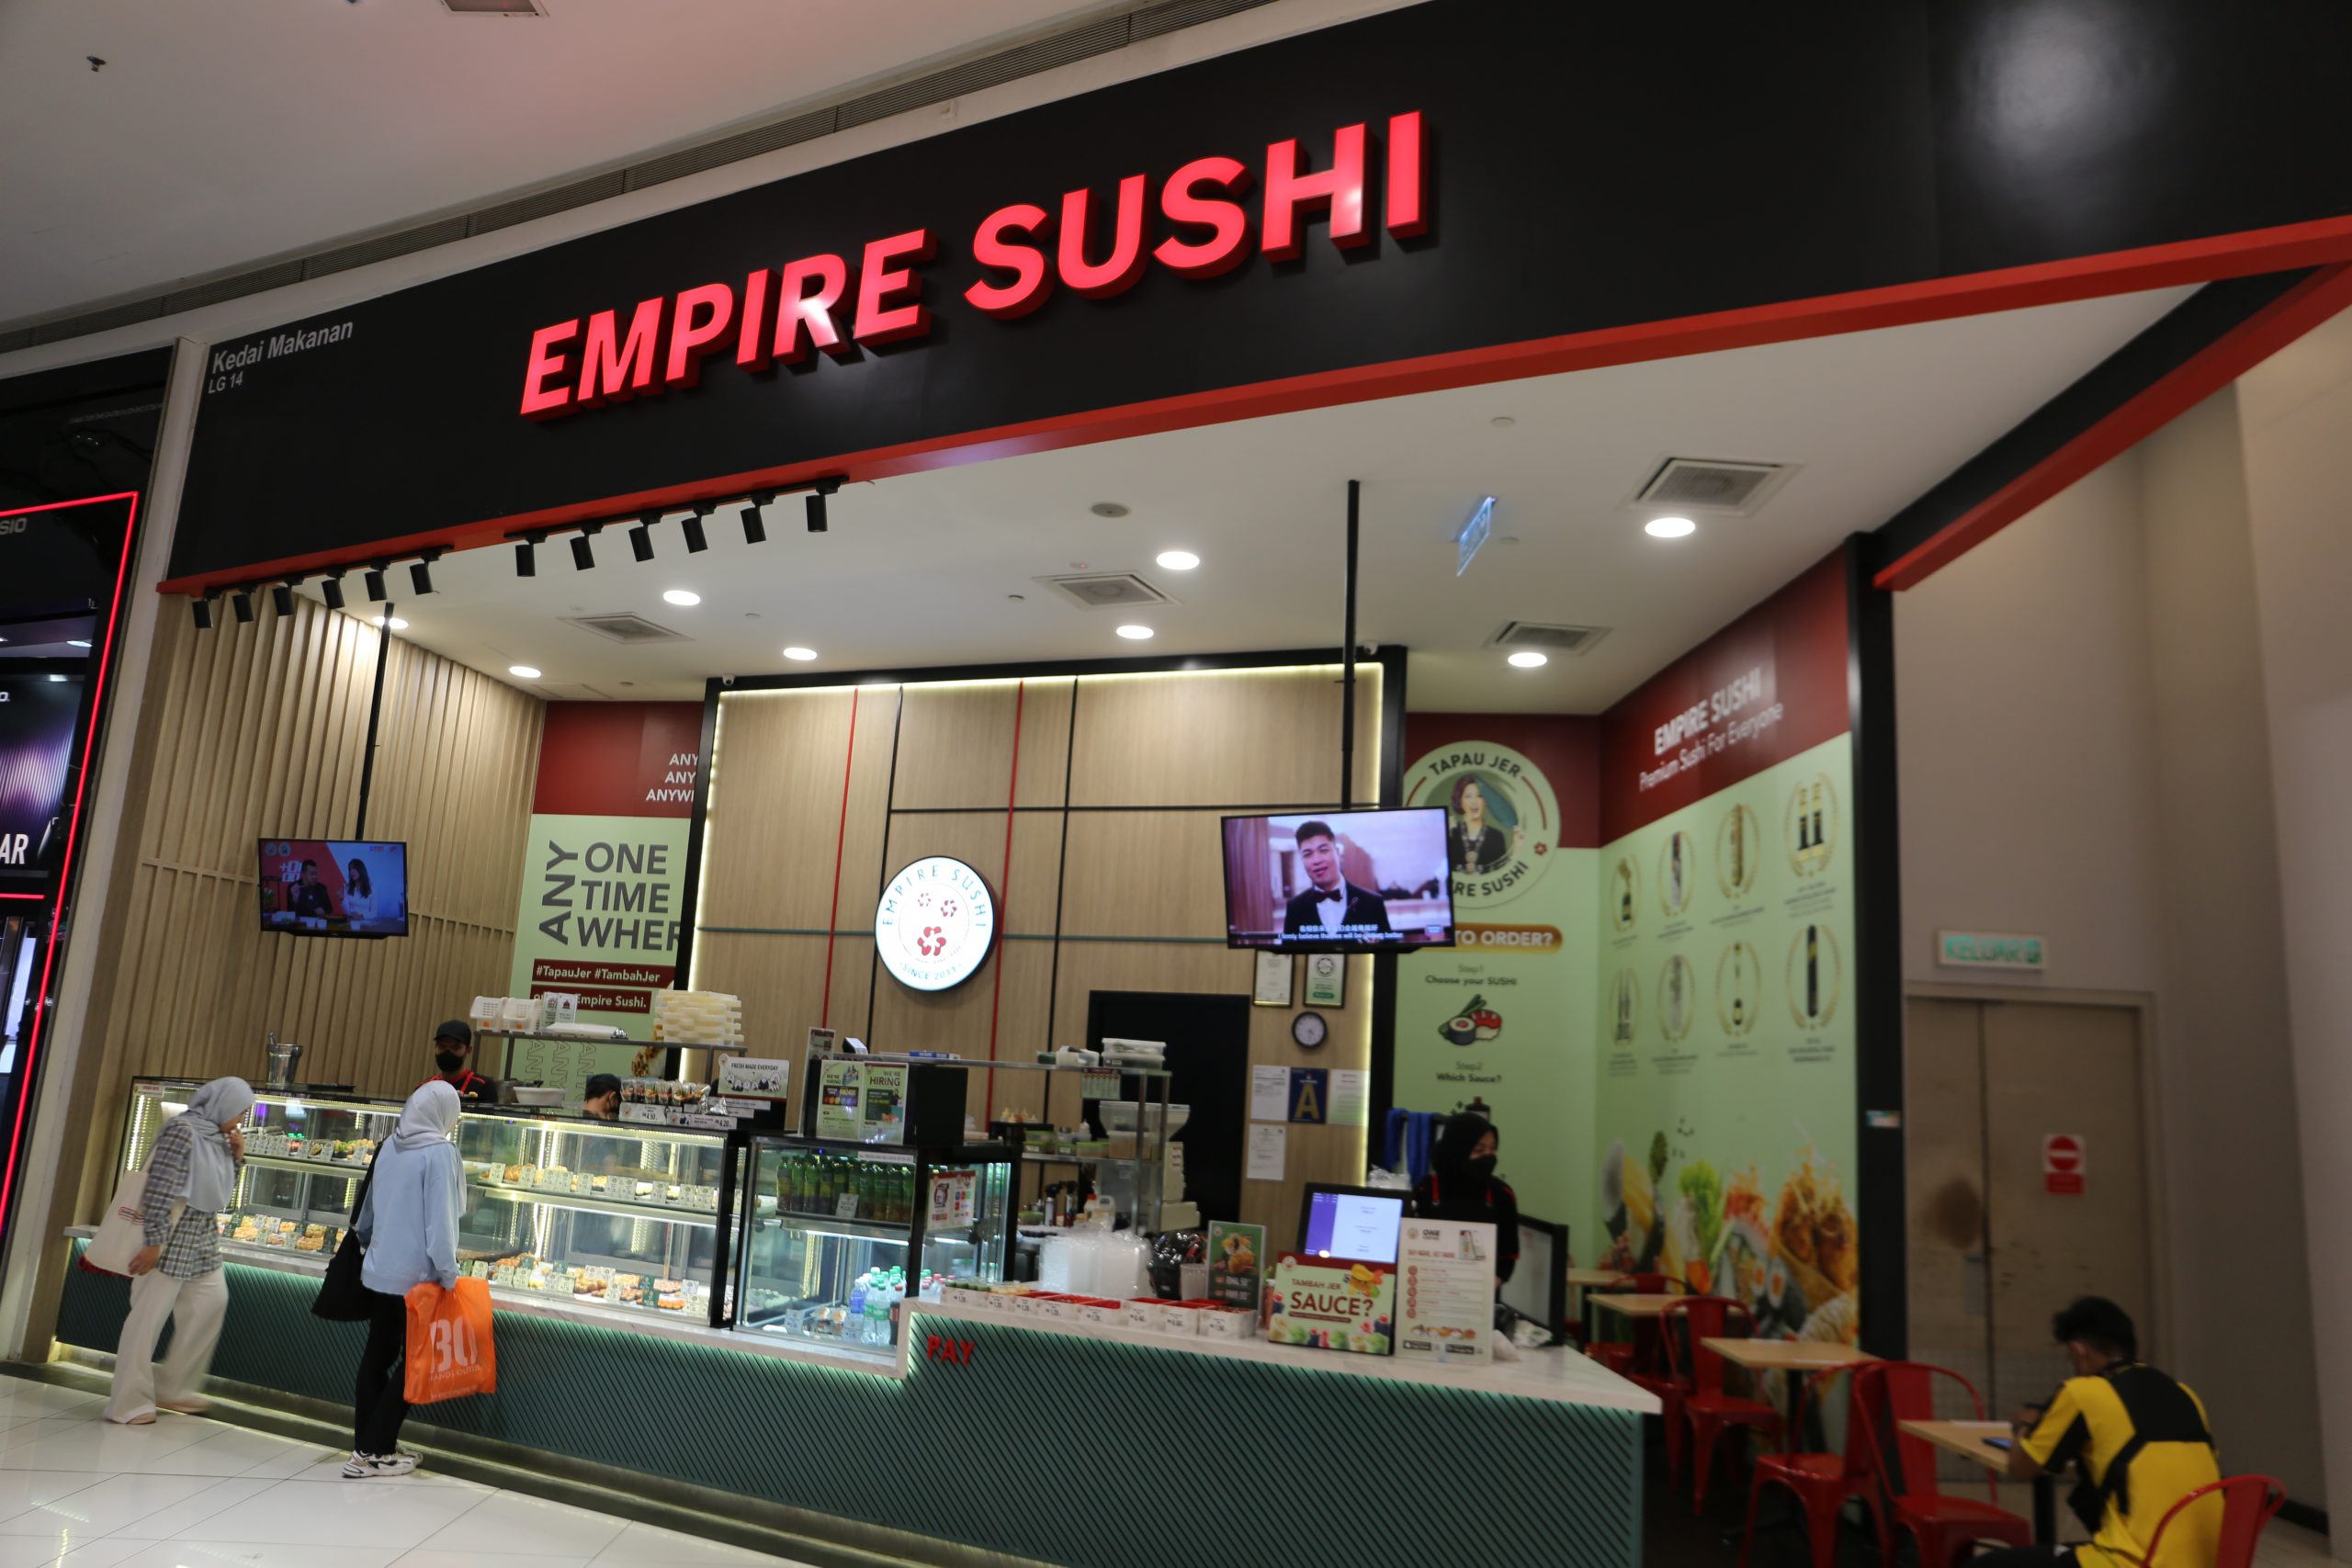 Empire Sushi